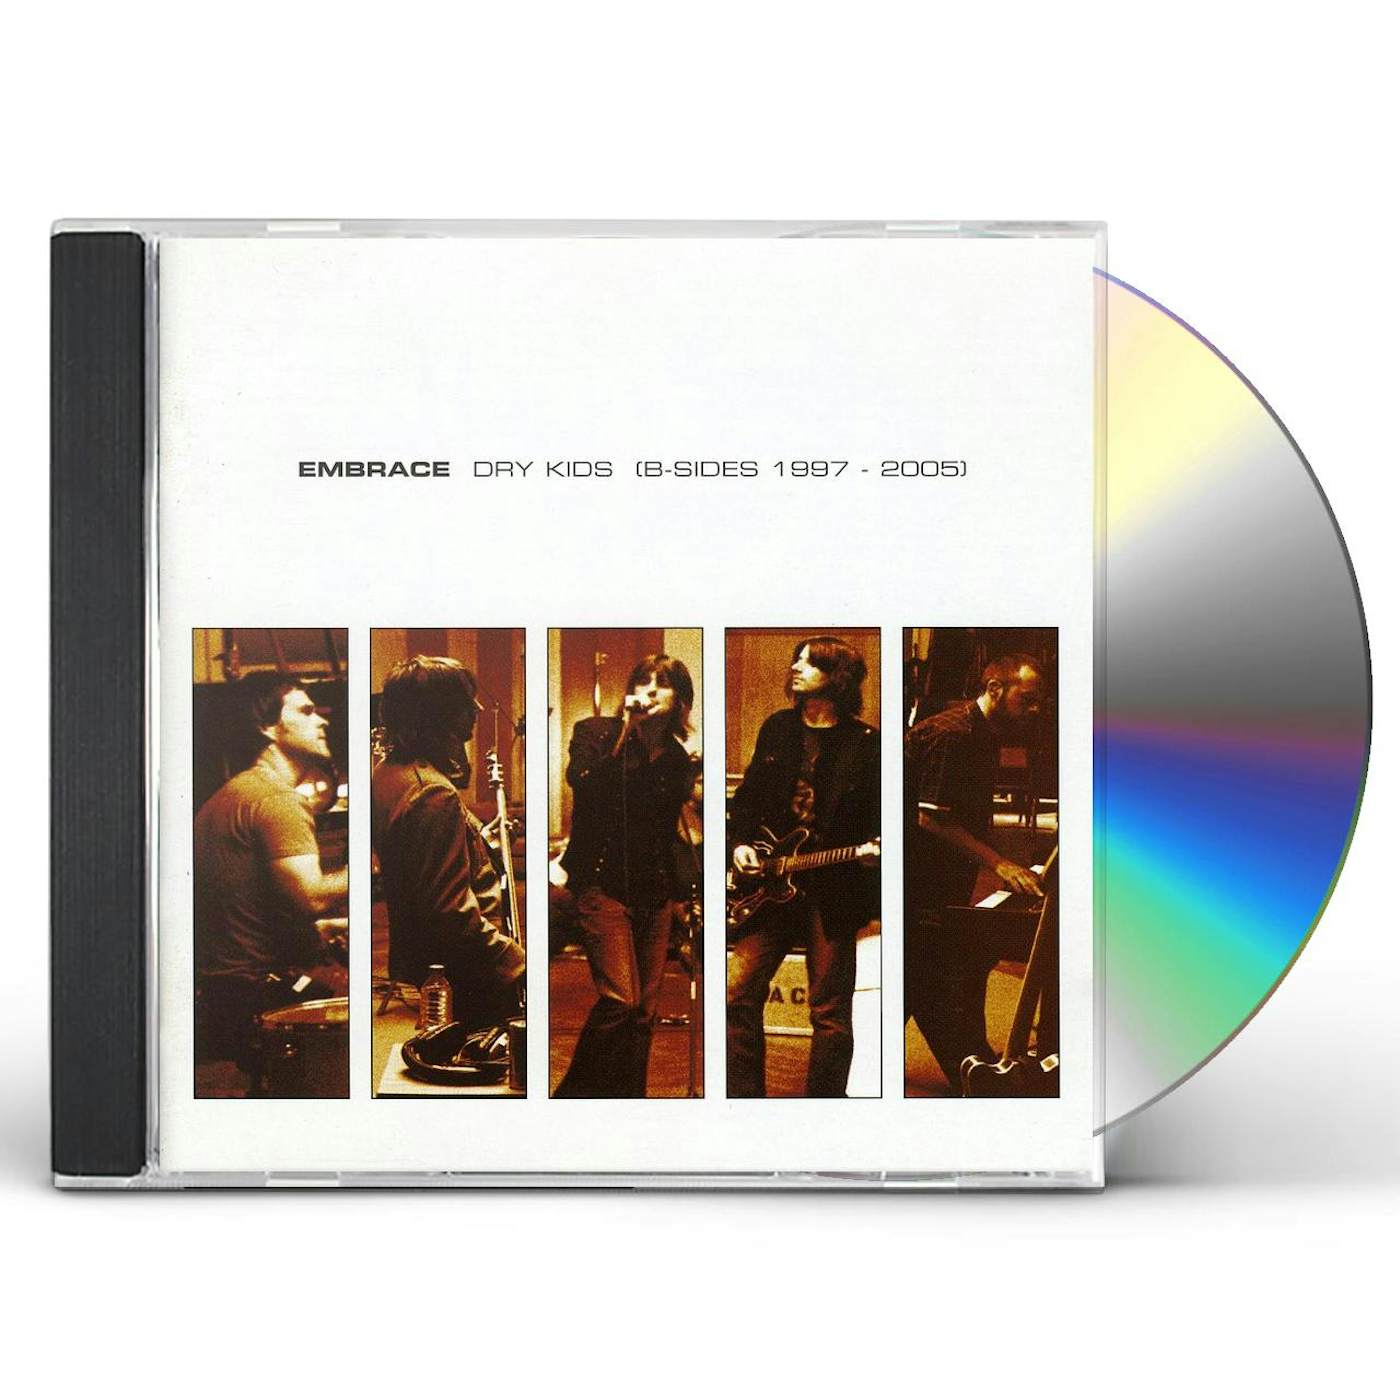 Embrace DRY KIDS (B-SIDES 1997-2005) CD